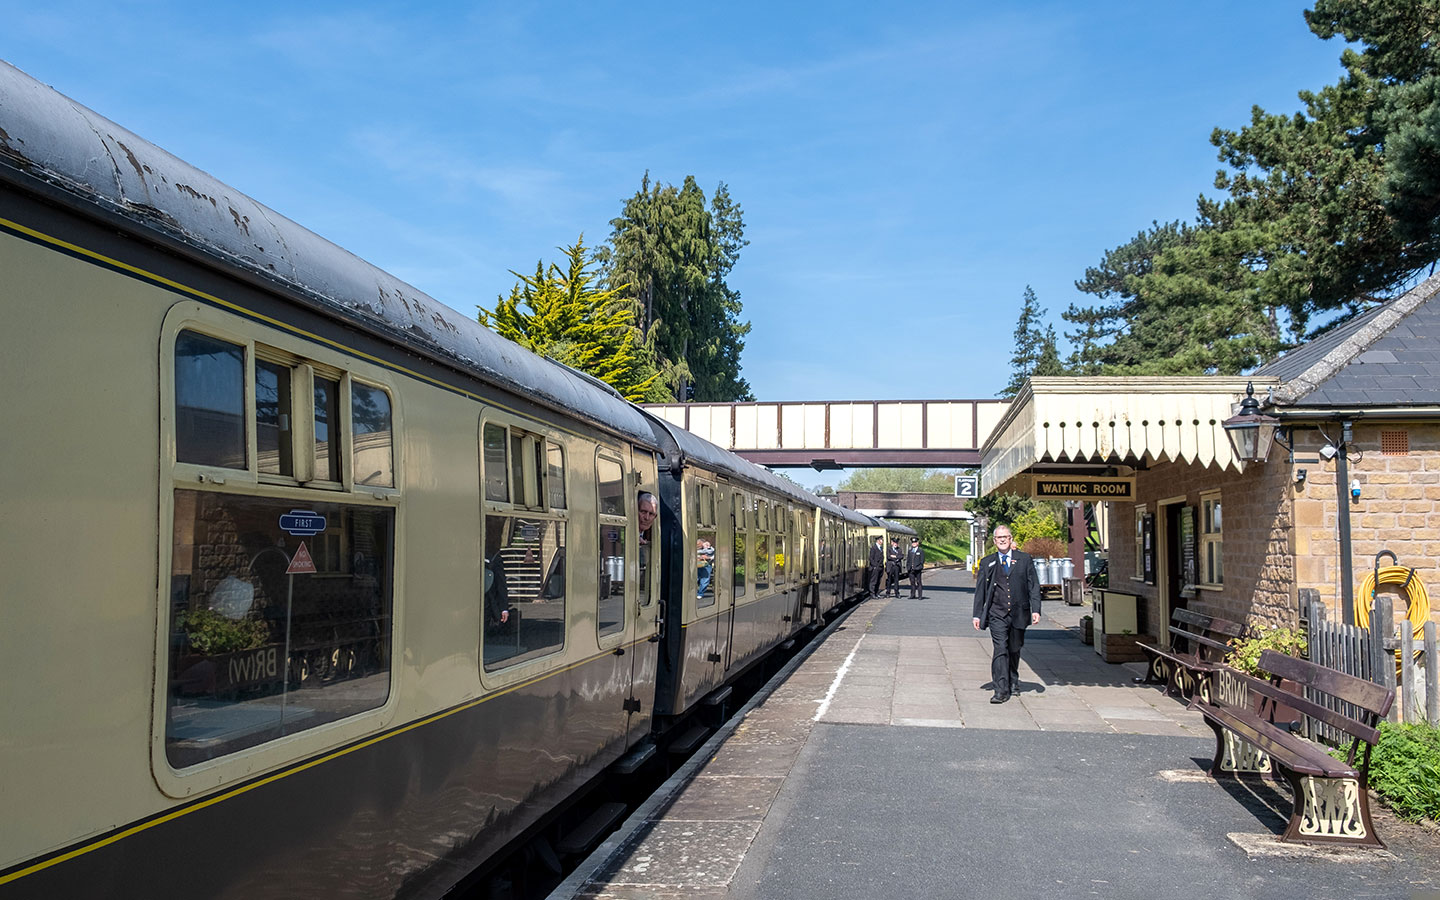 The Gloucestershire–Warwickshire Steam Railway